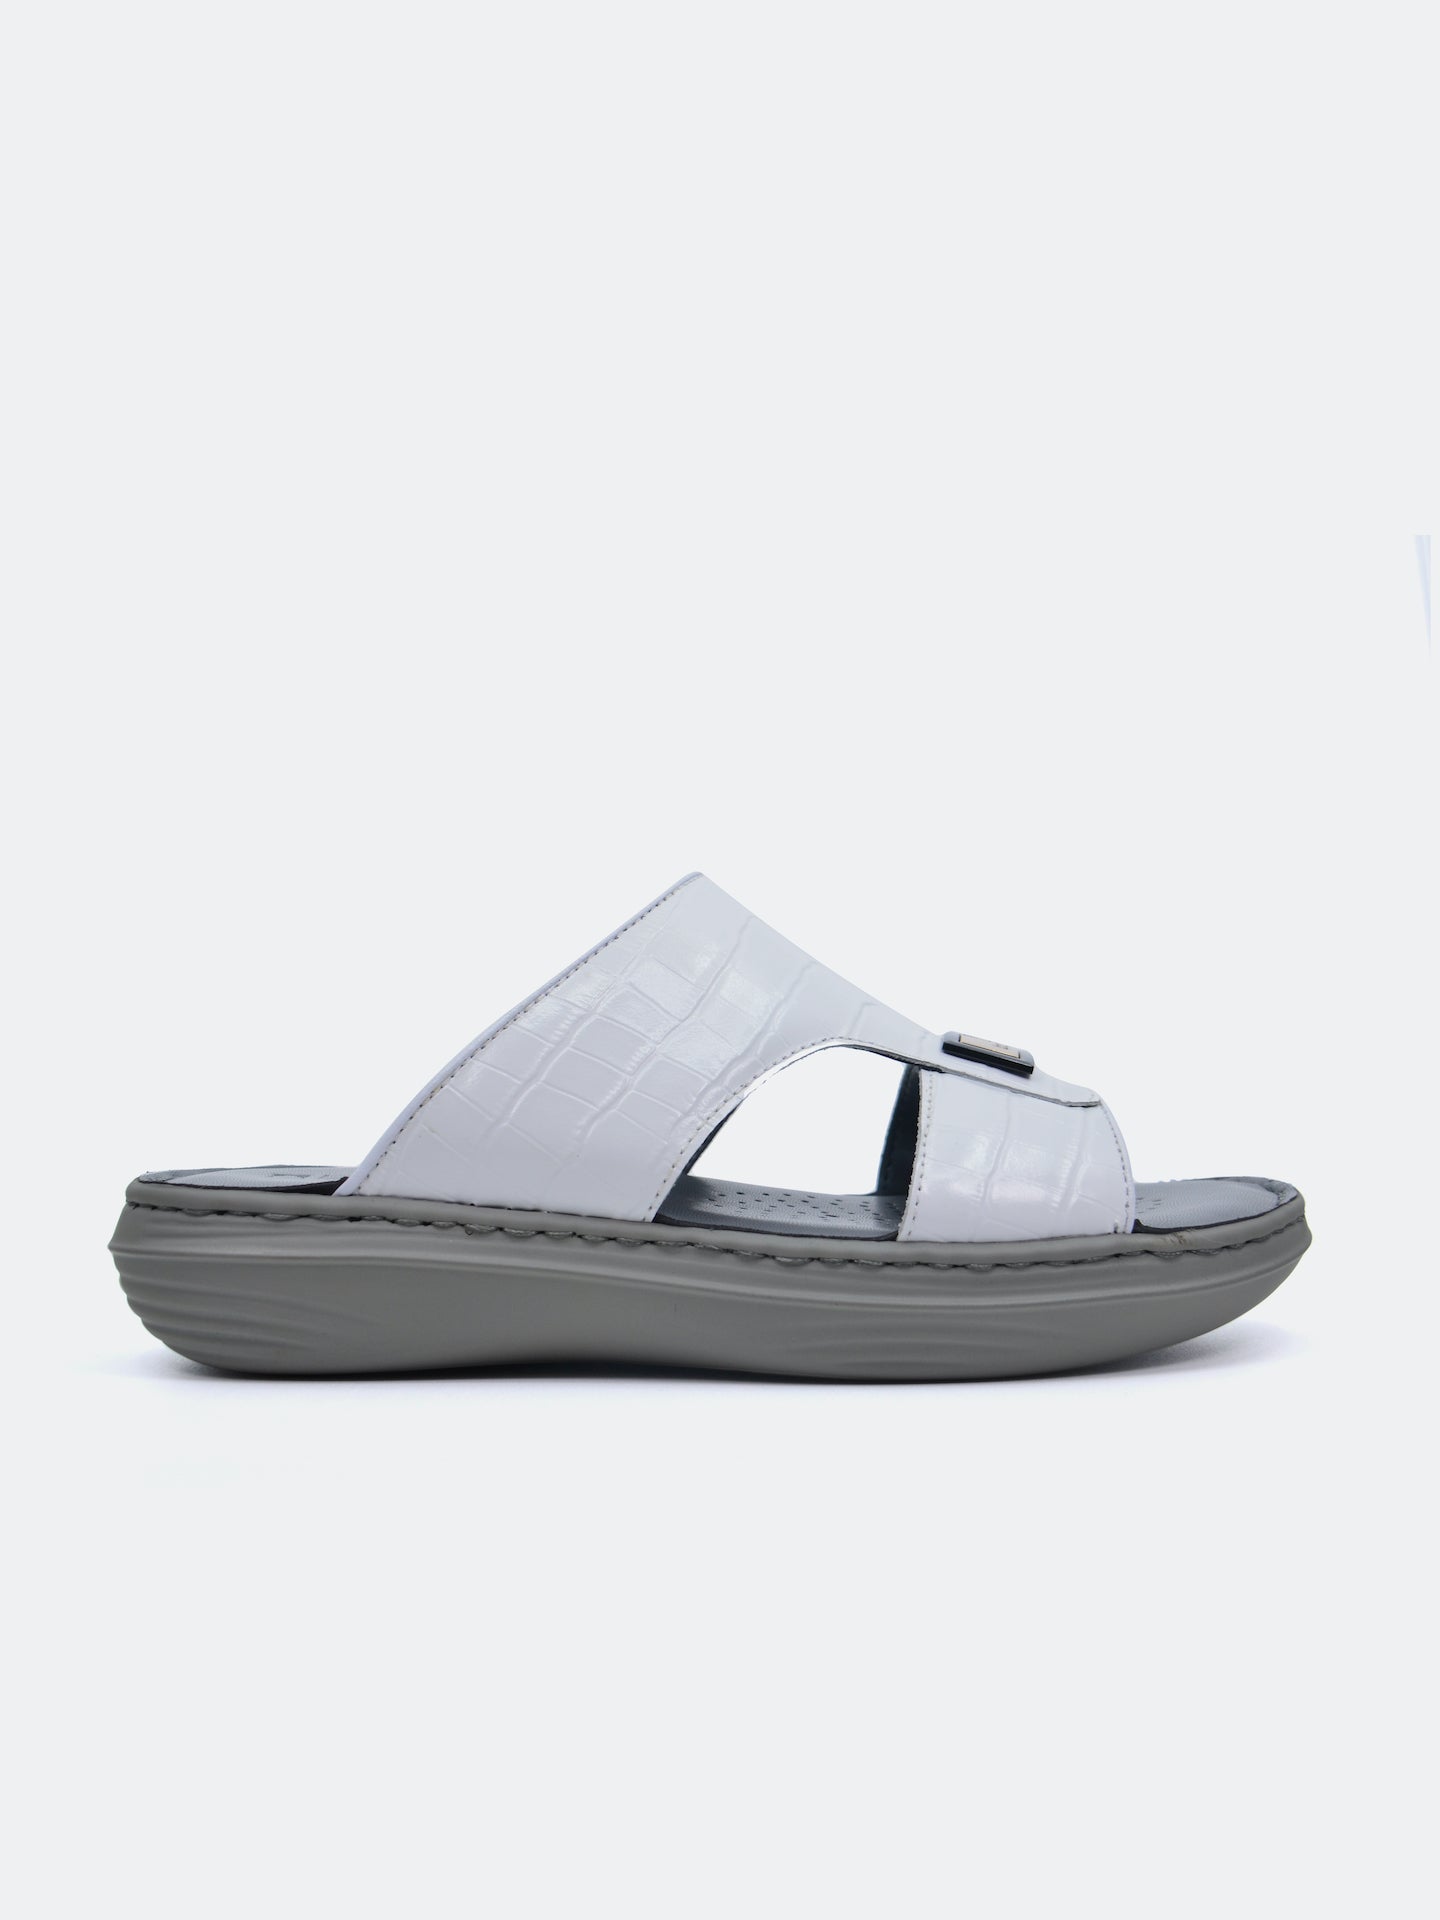 Barjeel Uno 21410-5 Men's Arabic Sandals #color_White